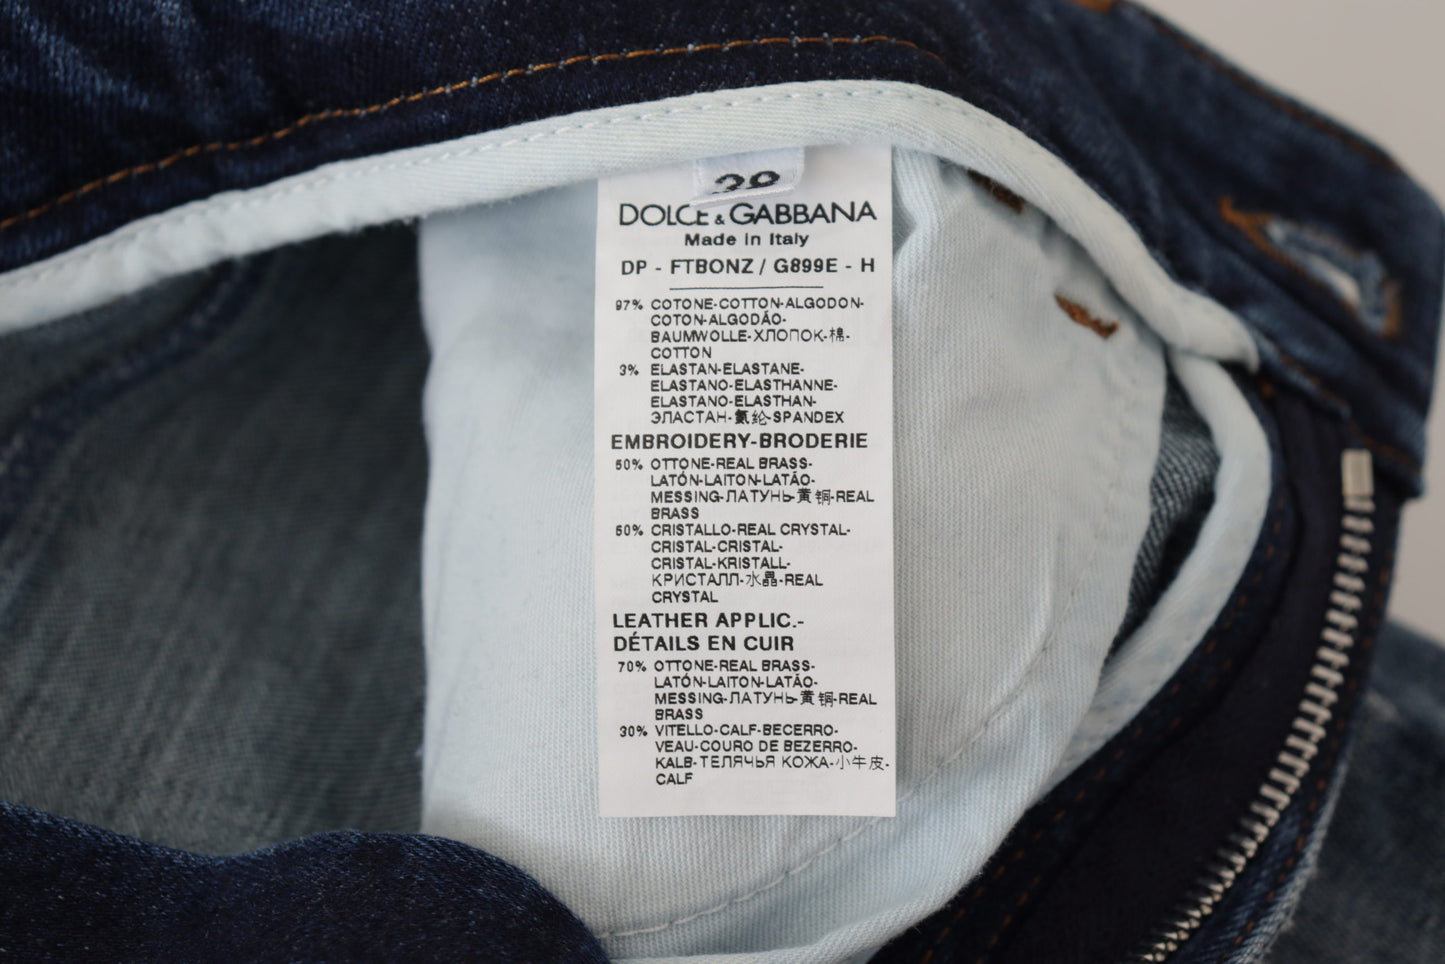 Dolce & Gabbana Blue Denim Crystal Embellished Pants Jeans - DEA STILOSA MILANO